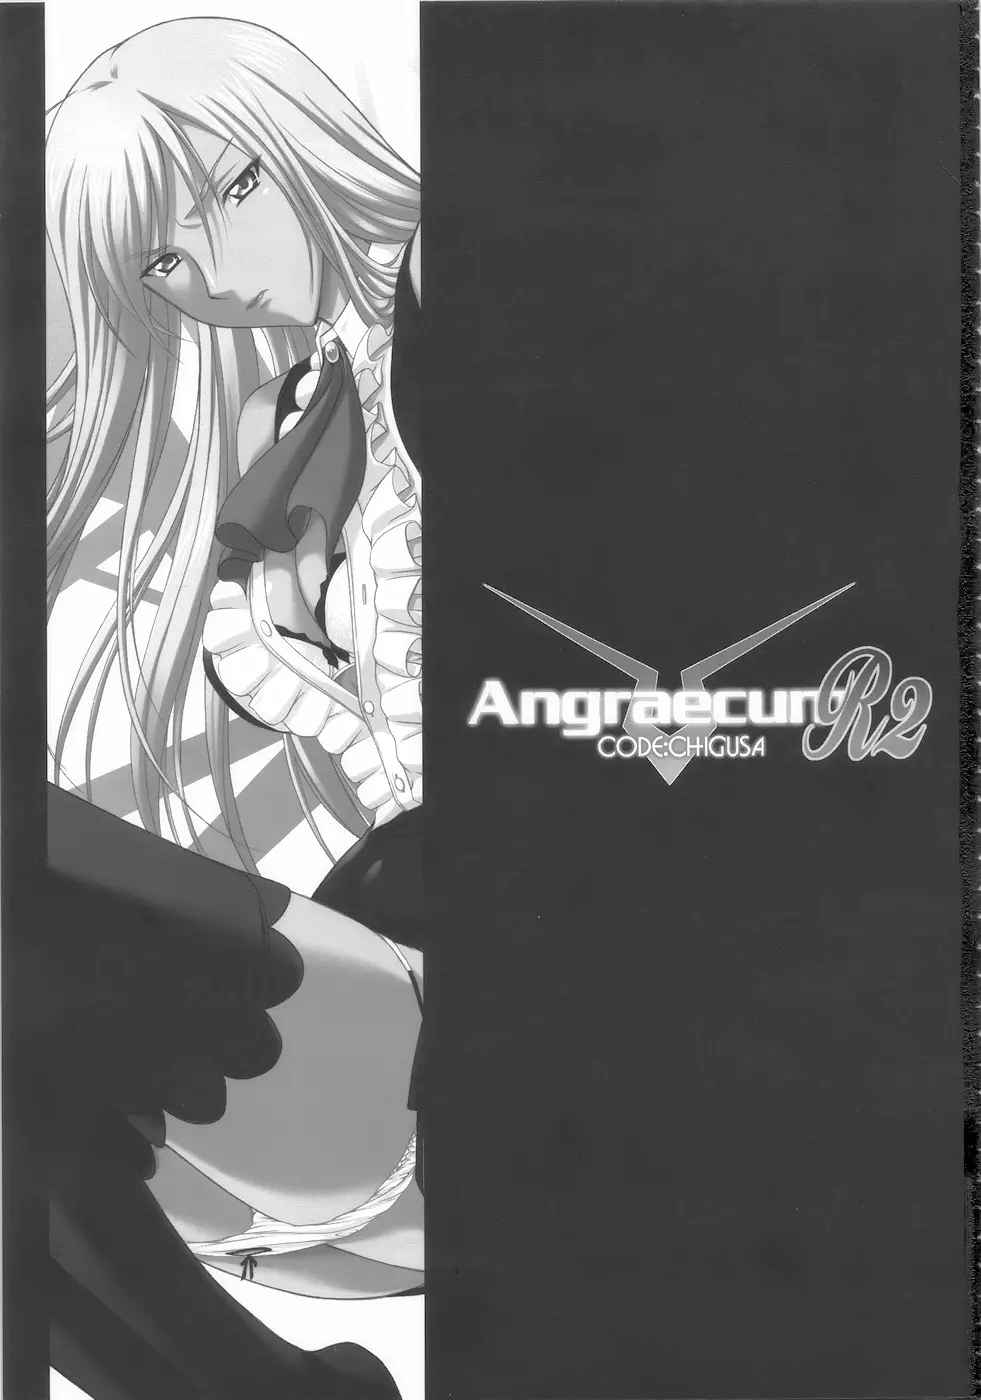 Angraecum R2 ~ Code: Chigusa 3ページ